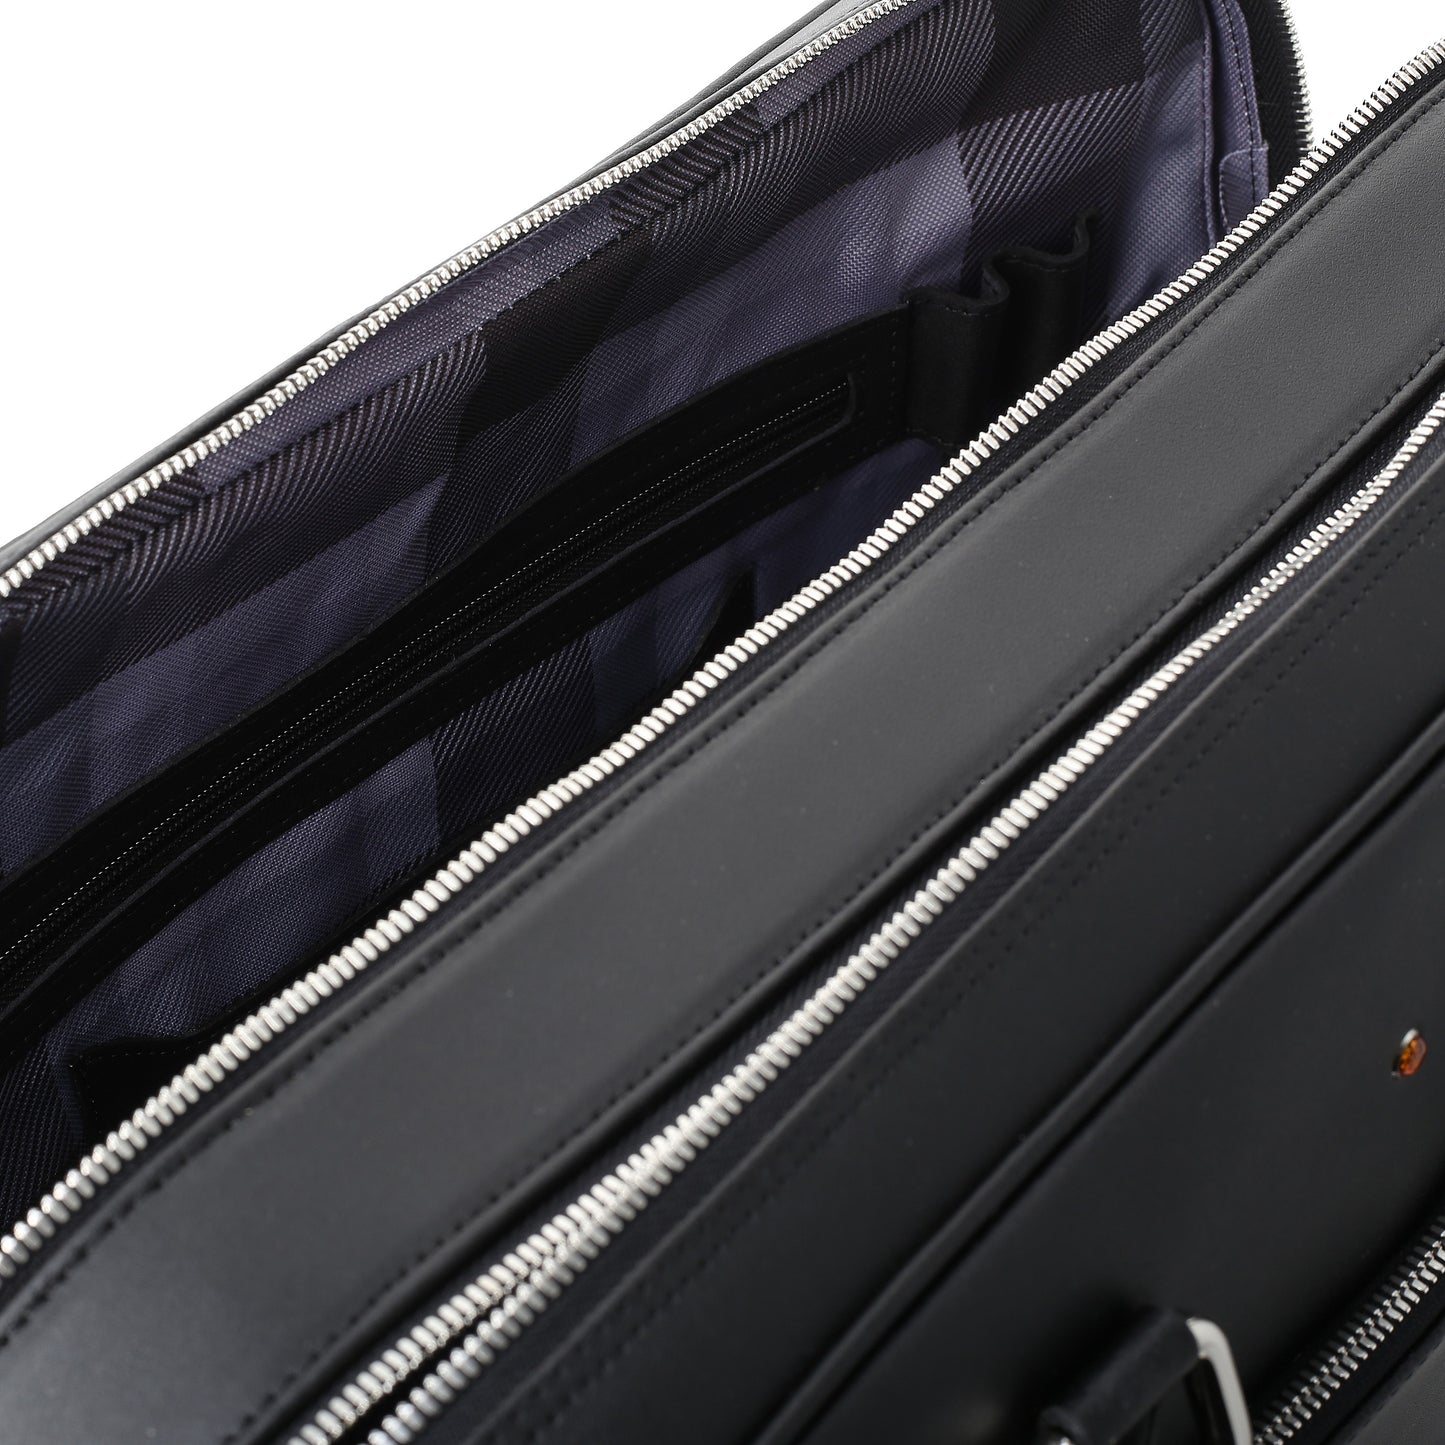 NAPA BLACK leather laptop bag